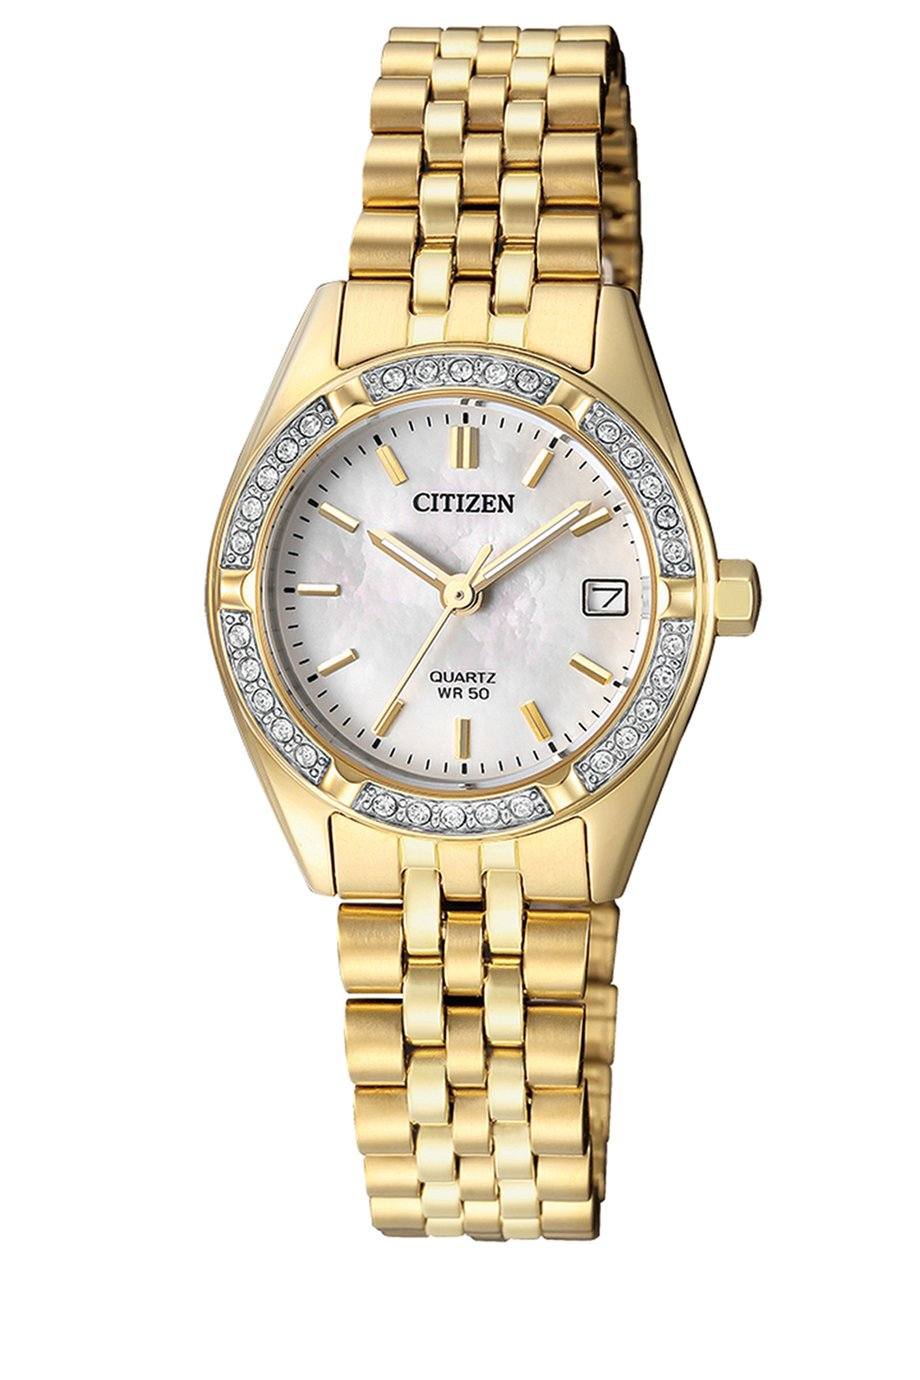 Citizen Ladies Gold Stone Set Watch EU6062-50D – Watches Galore